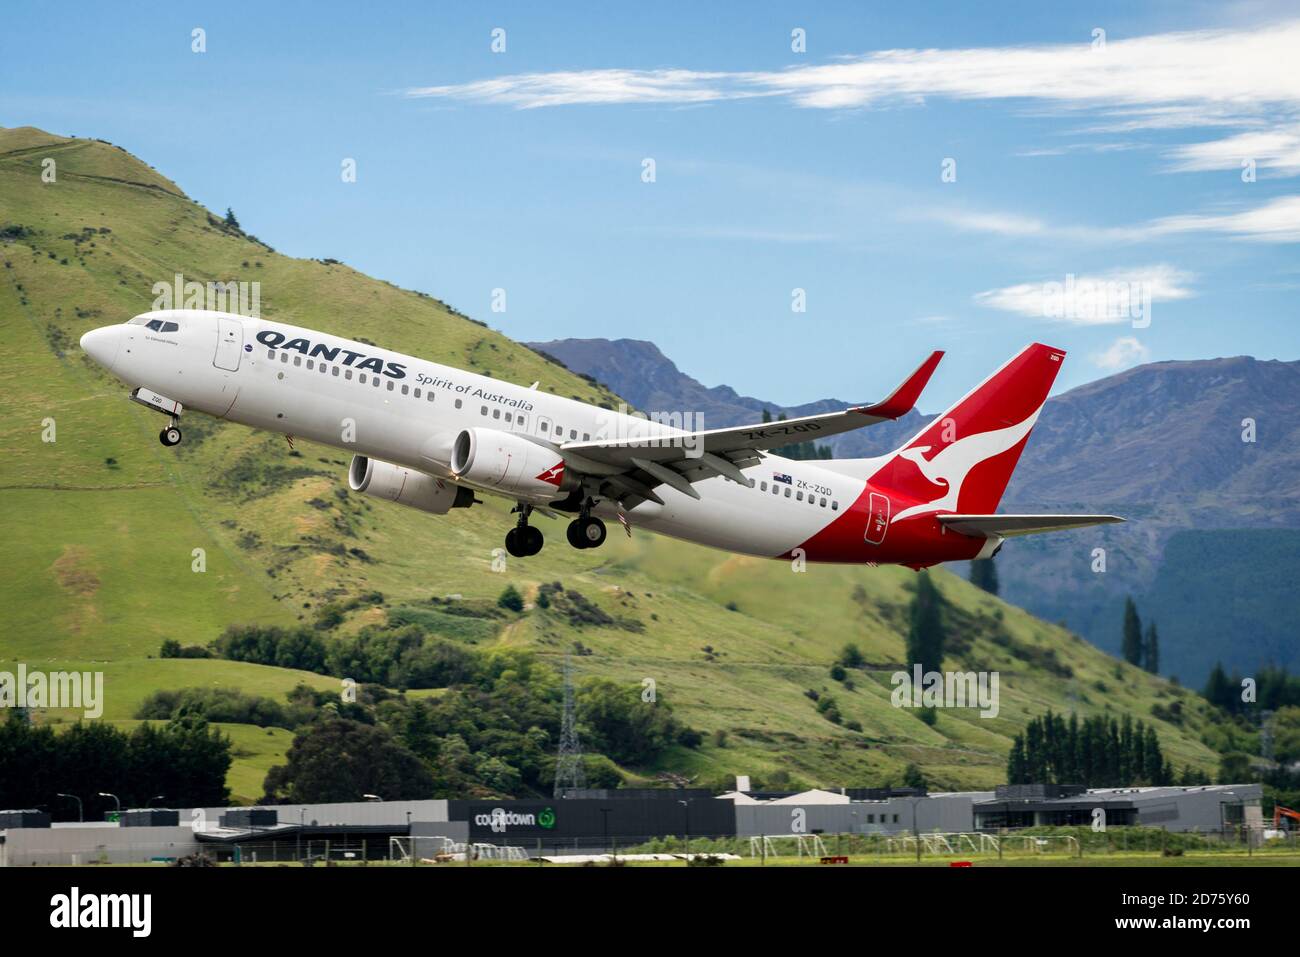 Queenstown, NEW ZEALAND - DEC 9, 2016: Airplane of Qantas Airways takes off from runway in Queenstown airport, Queenstown, South Island of New Zealand Stock Photo